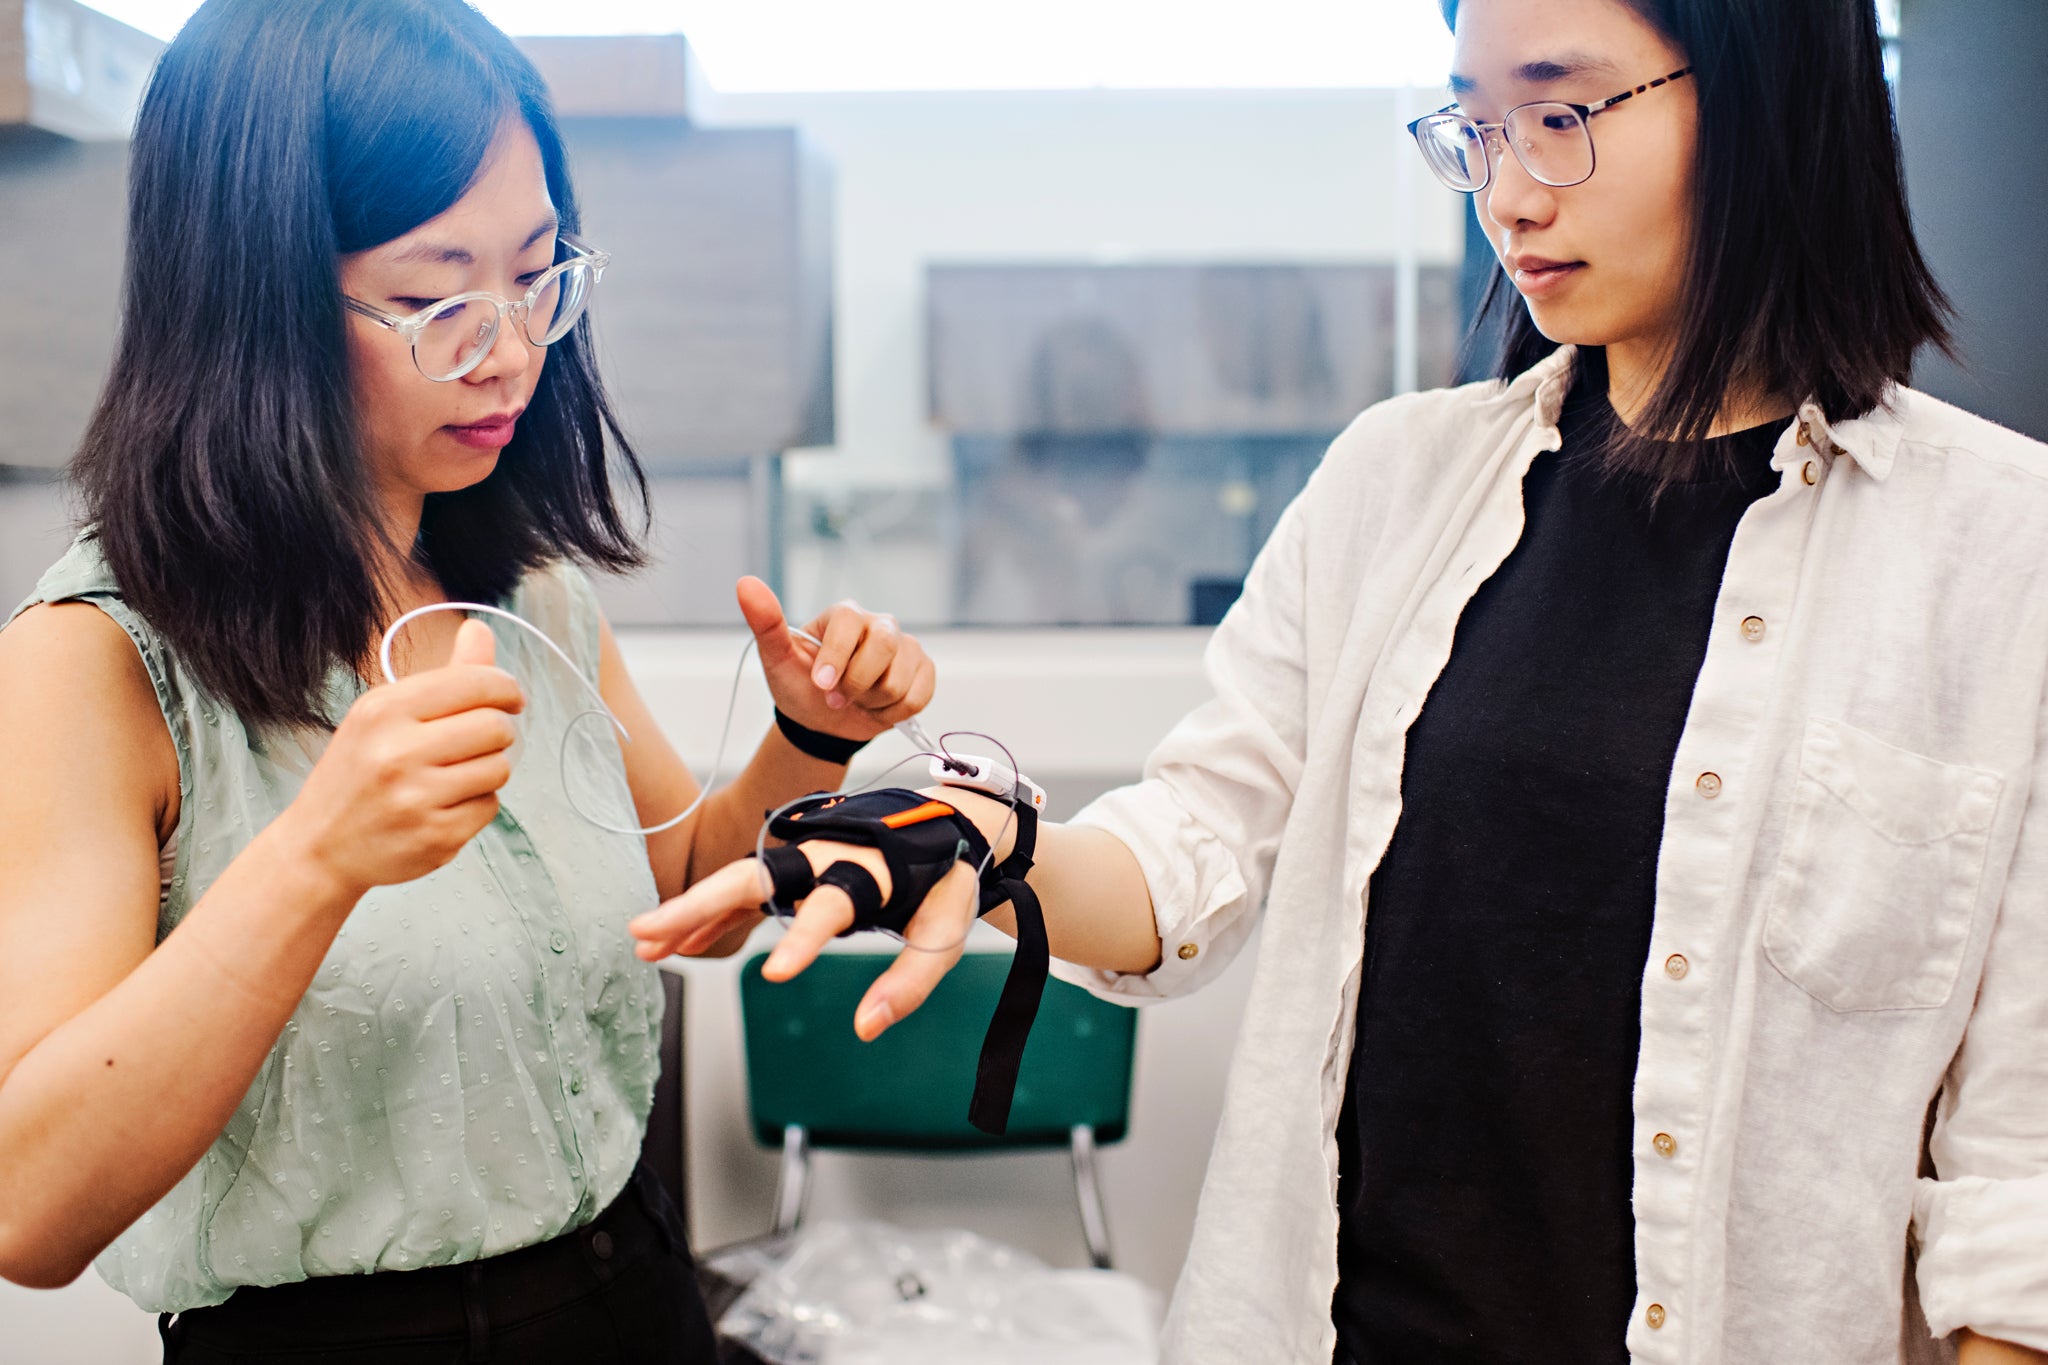 Professor and student using wearable sensors